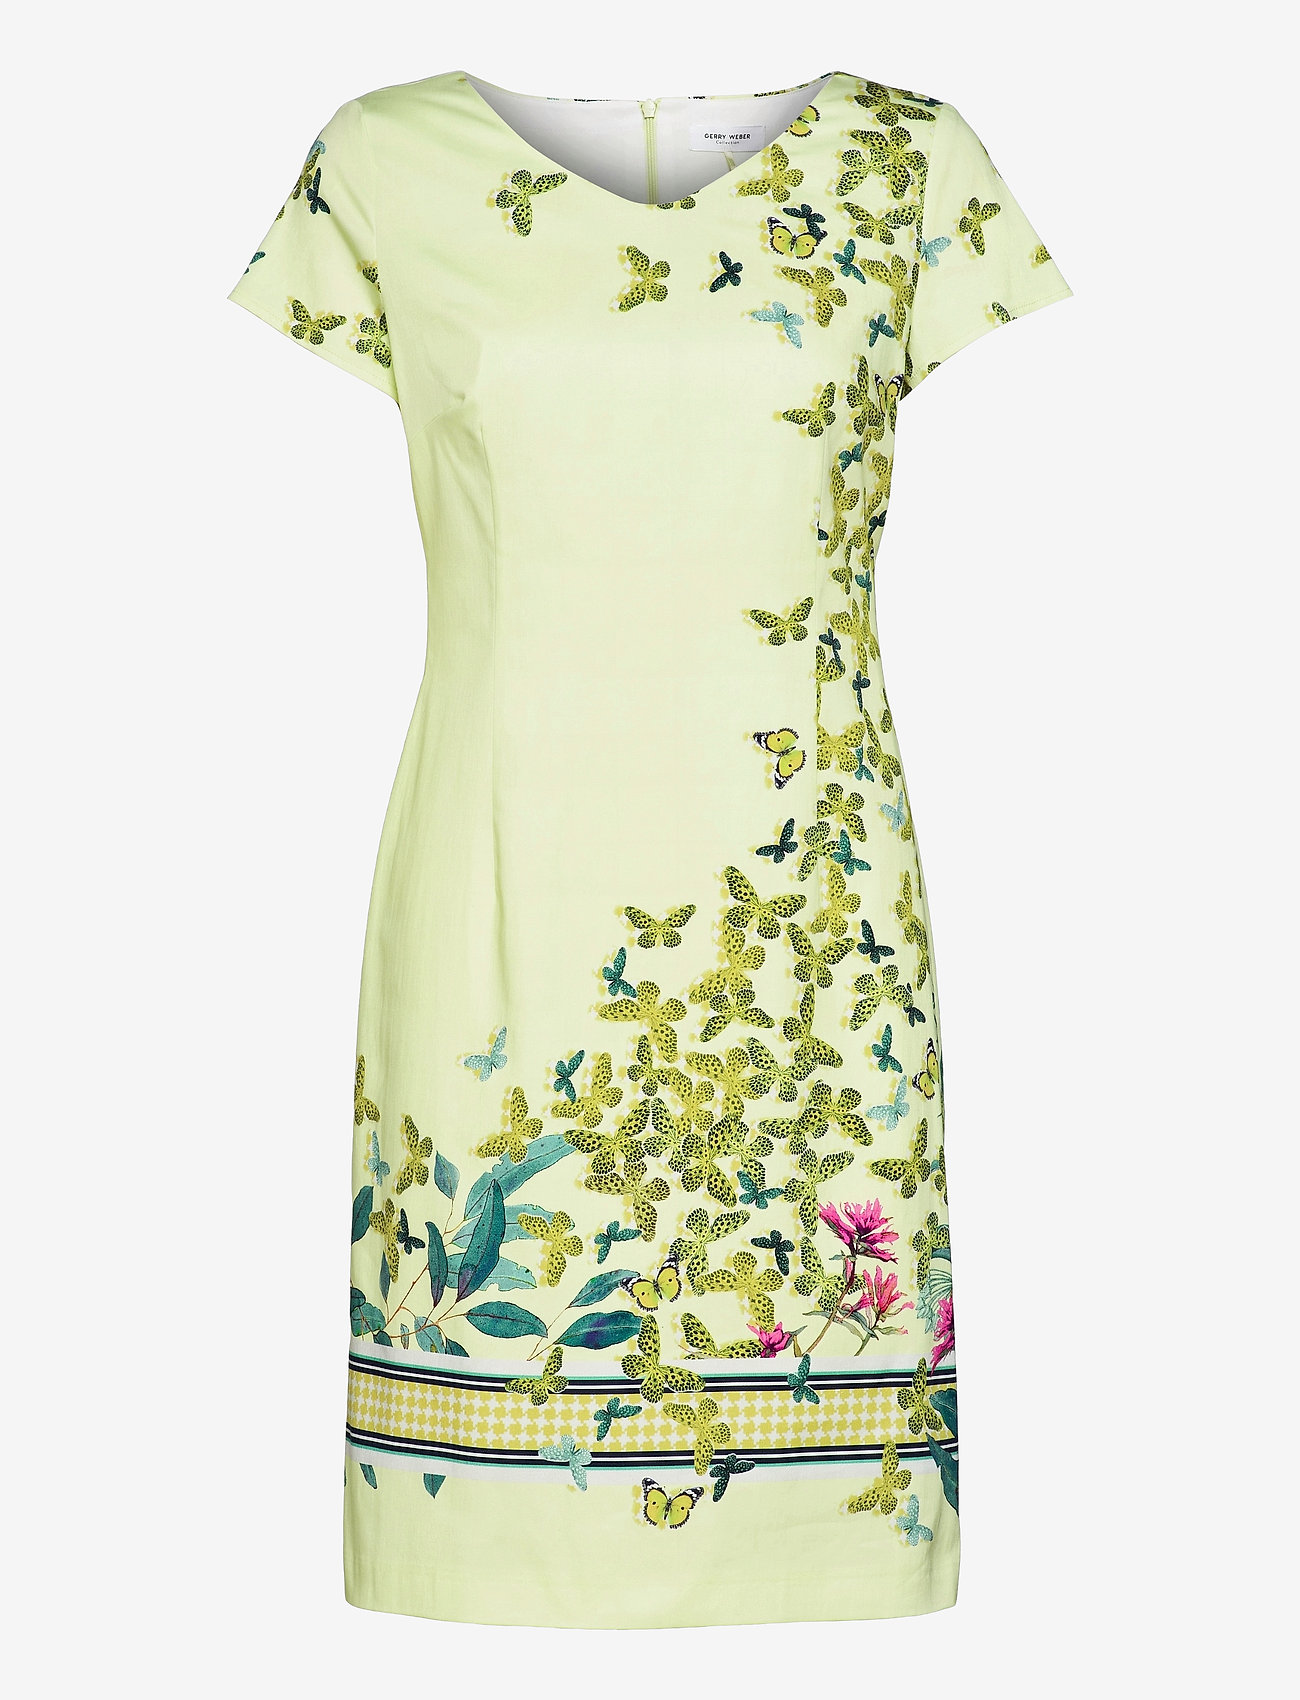 Gerry Woven Fabric Midi kjoler | Boozt.com